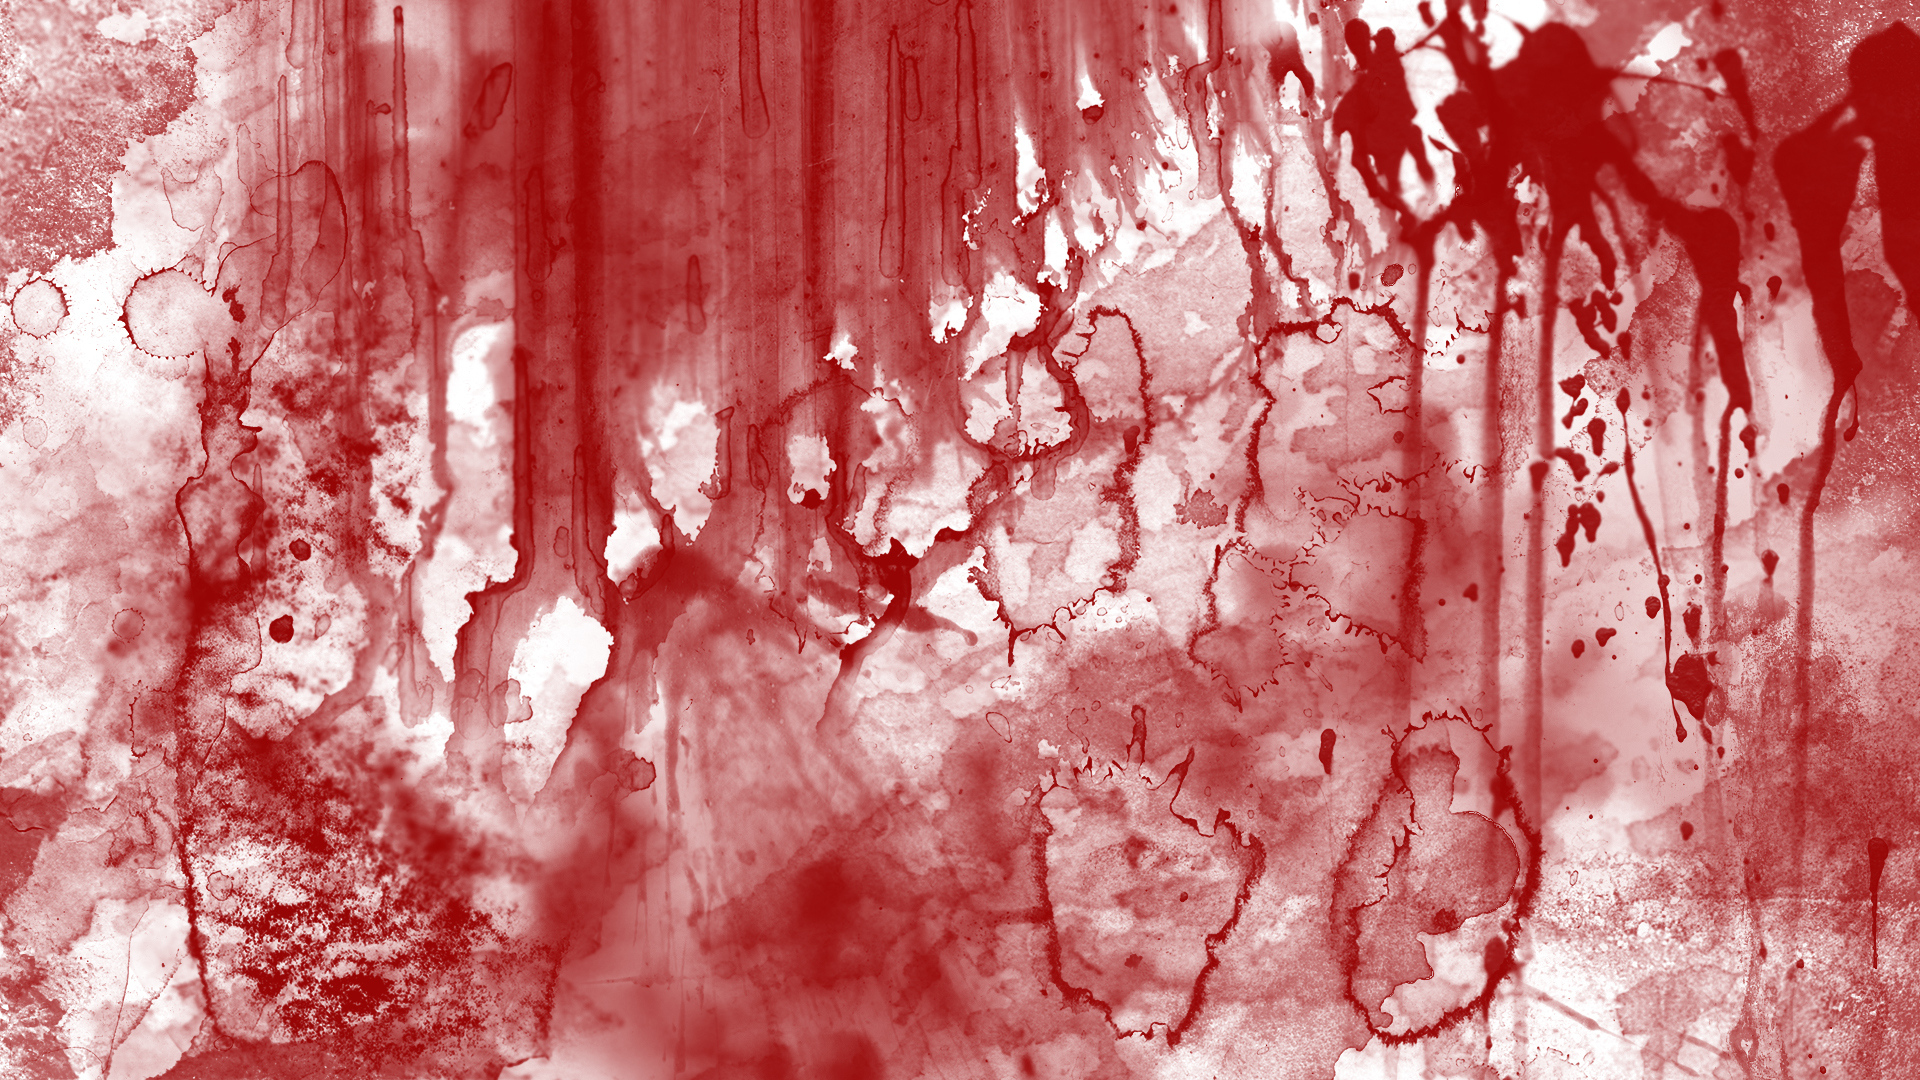 Blood Computer Wallpapers Desktop Backgrounds 1920x1080 ID306929